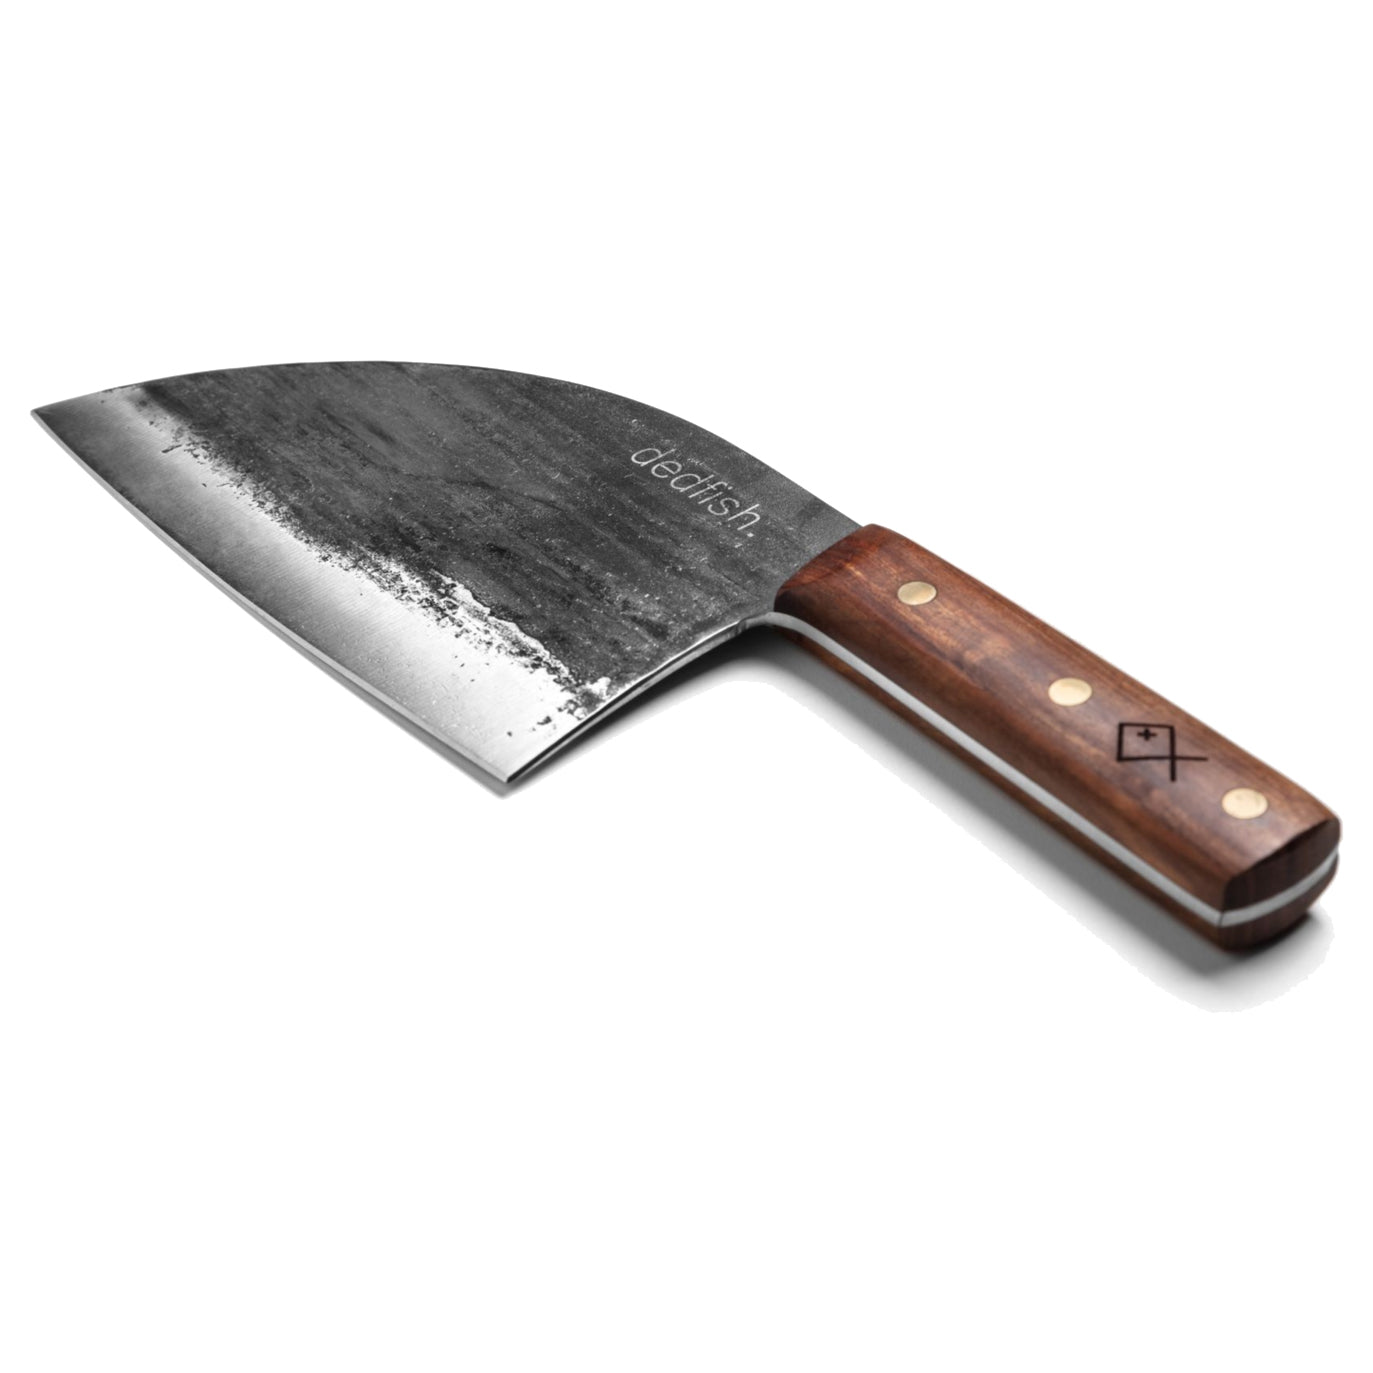 Dedfish Co. Kitchen Butcher Knife With Leather Sheath_6_cc